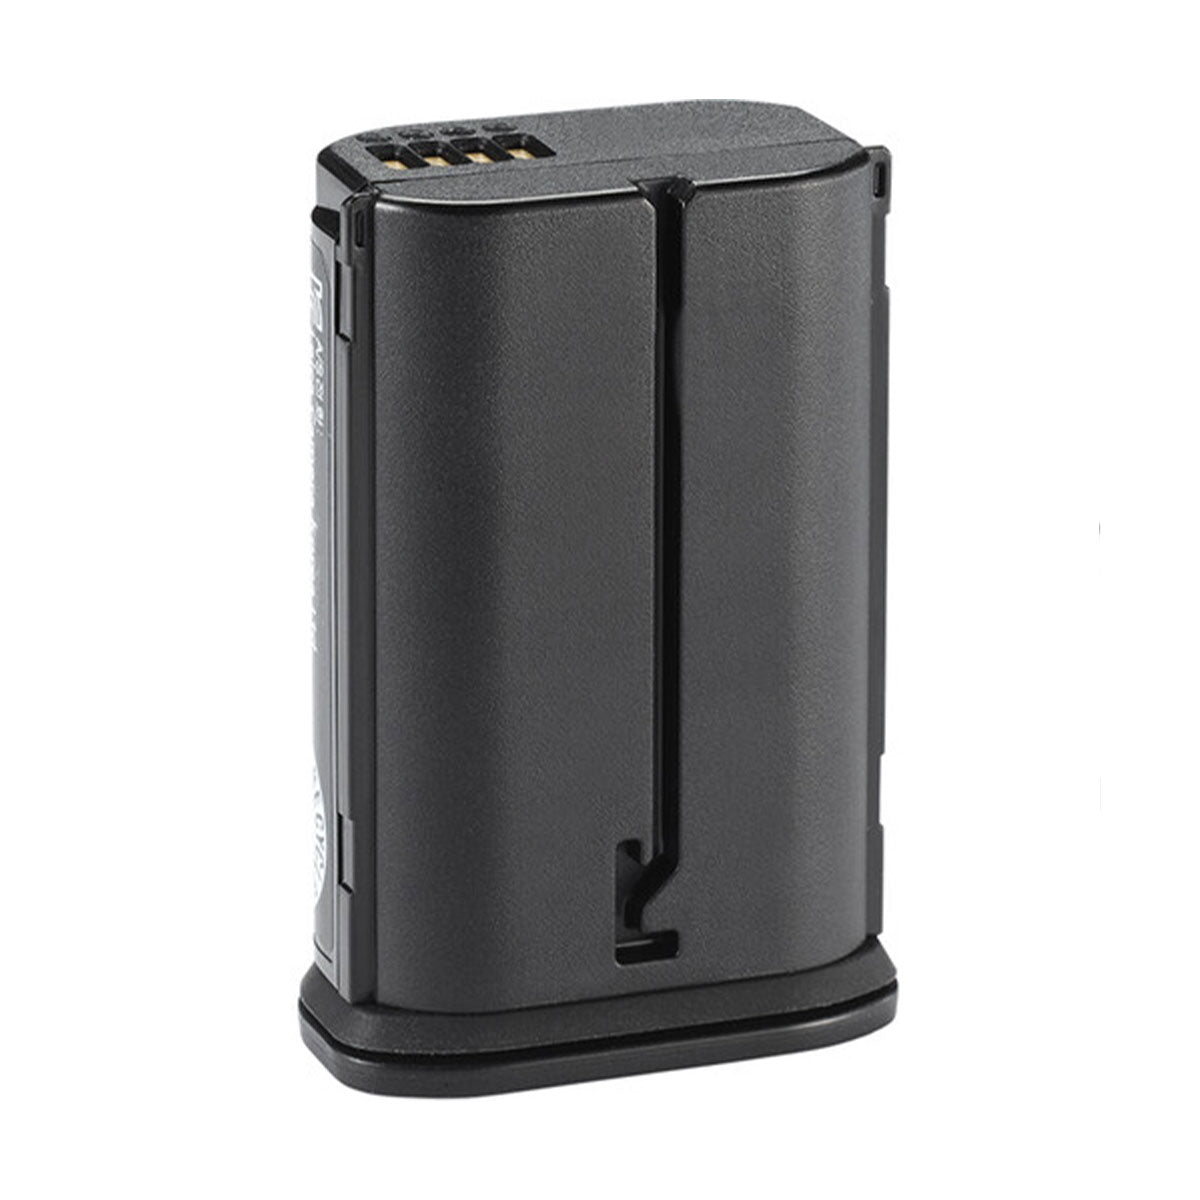 Leica USB-C Power Set w/ Dual Charger & BP-SCL6 Battery (Q2, Q3, SL2, SL2-S, SL3)